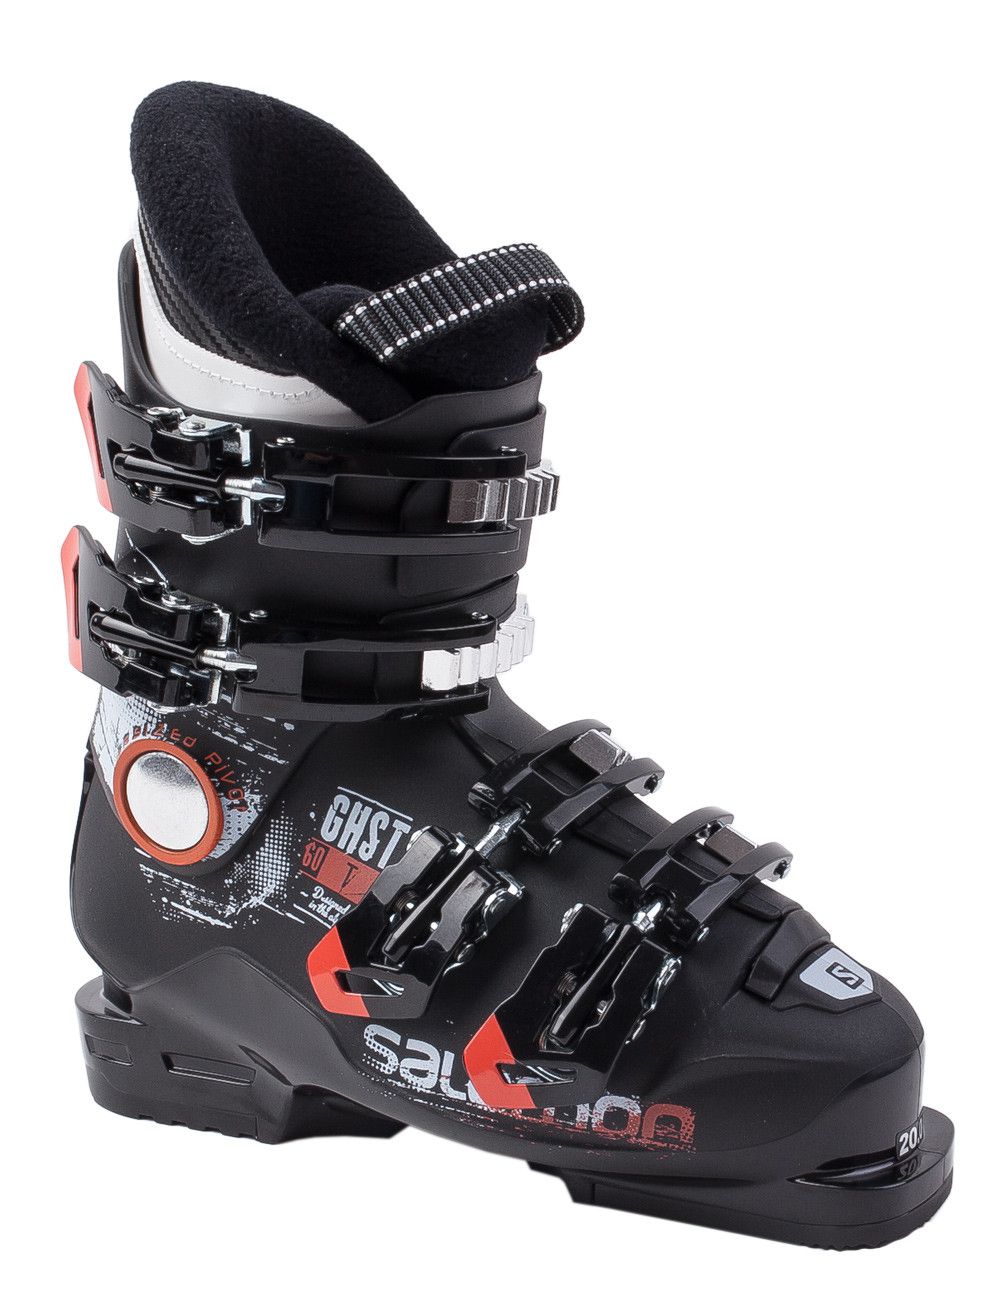 Buty narciarskie Salomon Ghost 60T